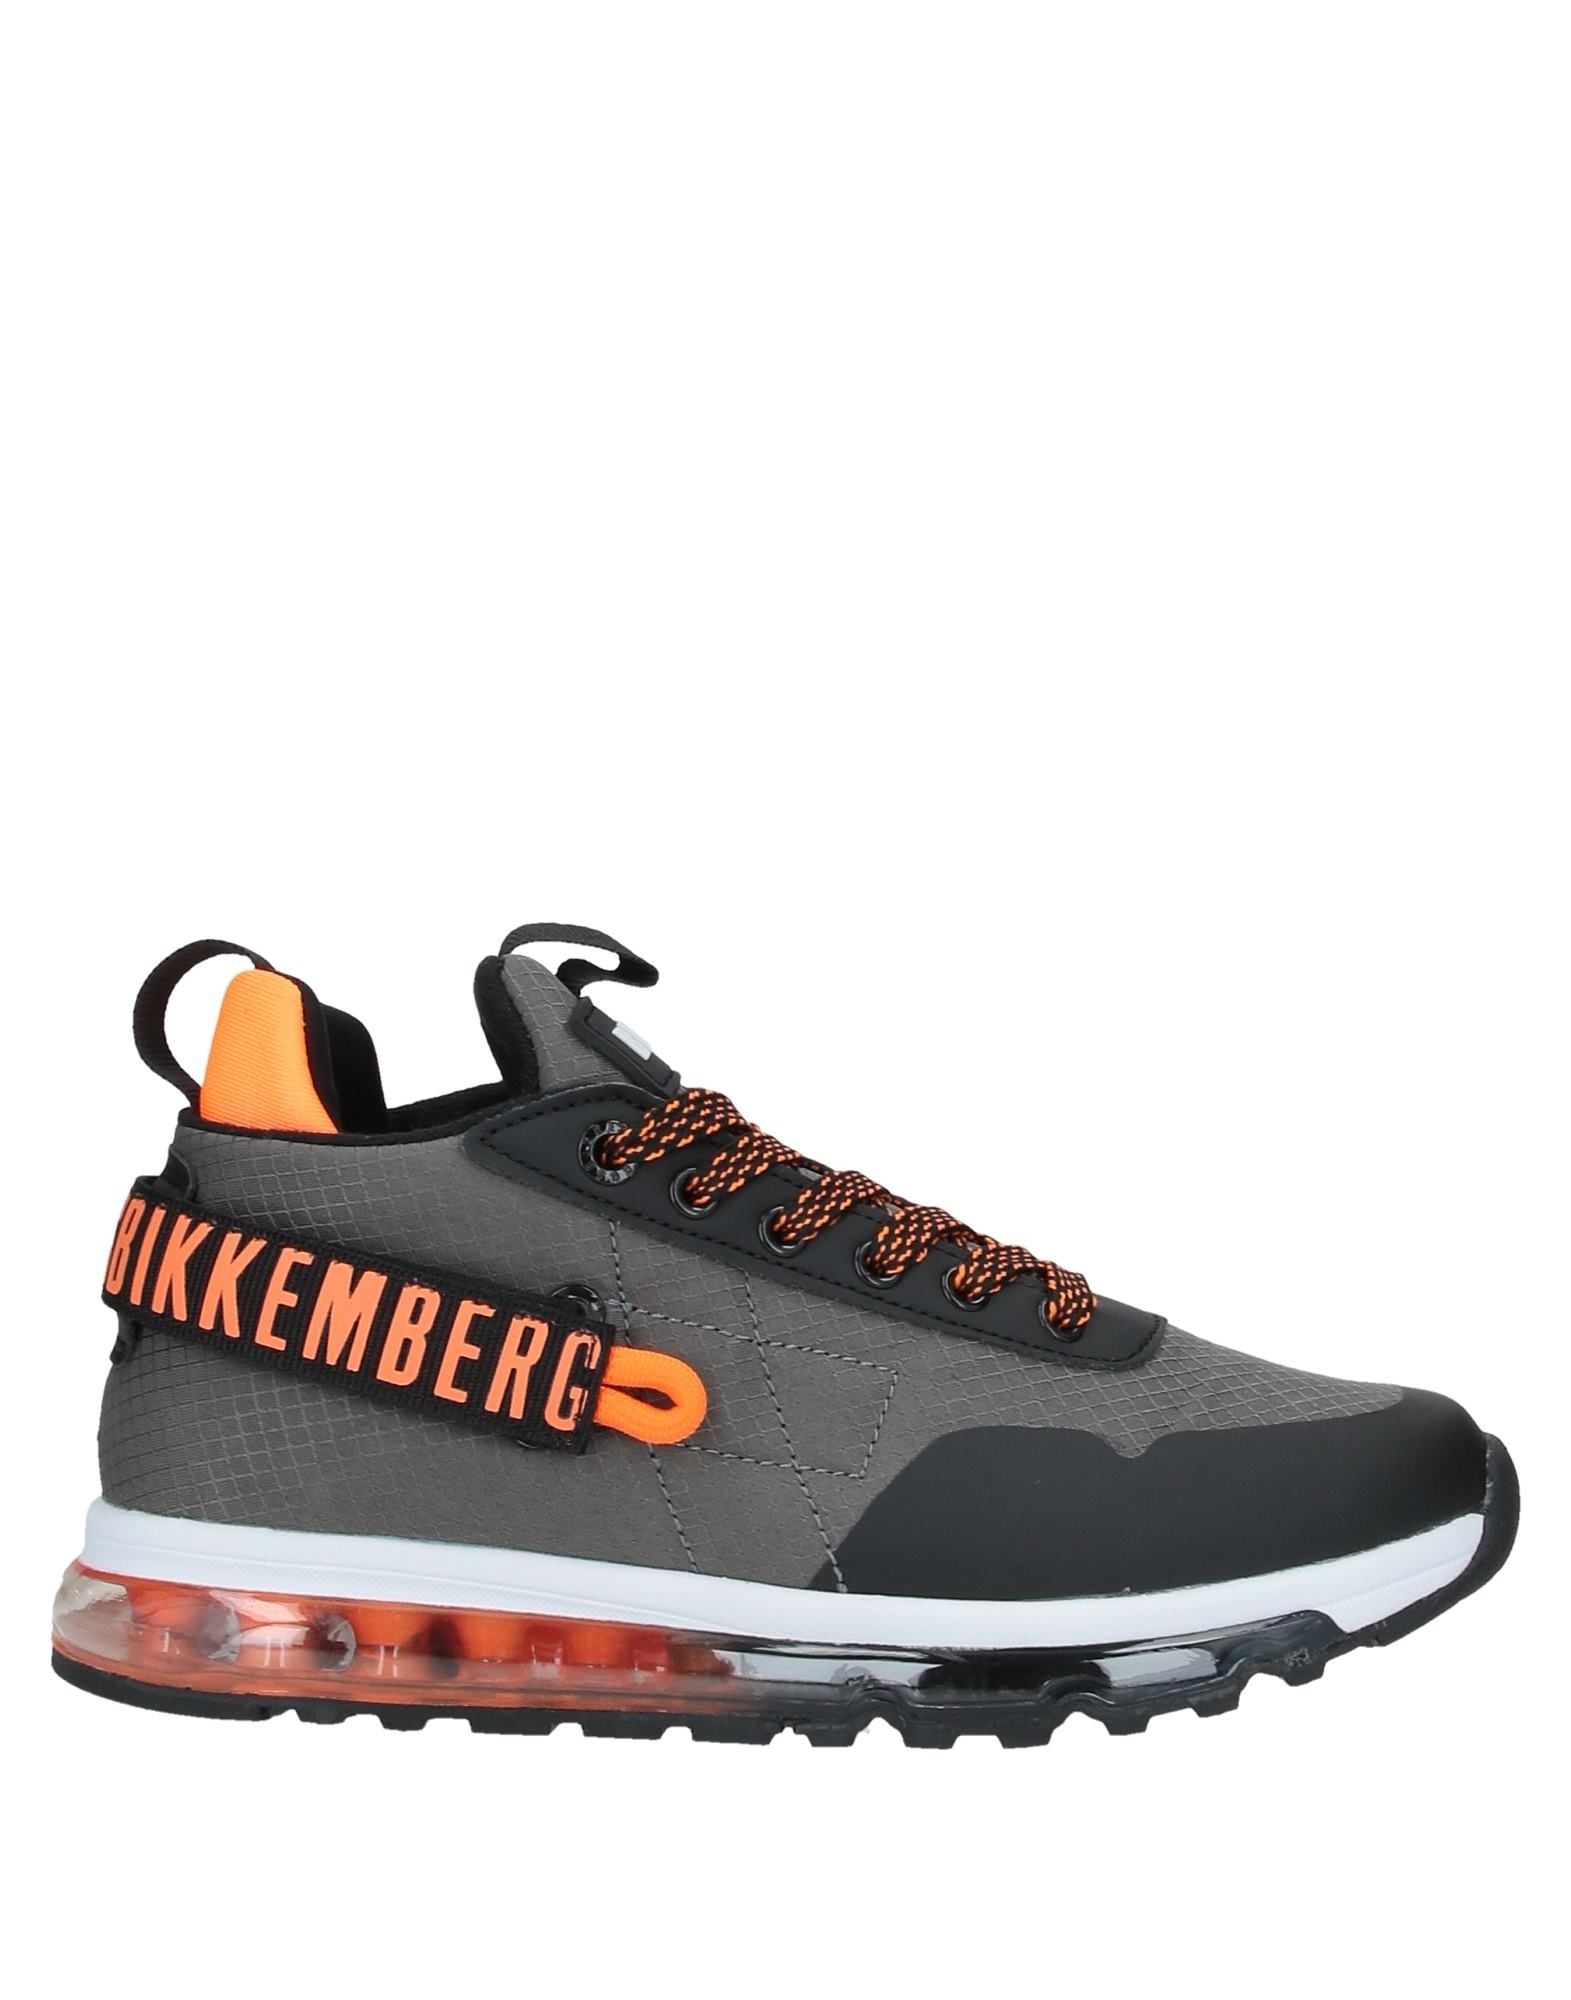 BIKKEMBERGS Low-tops & sneakers - Item 11955369